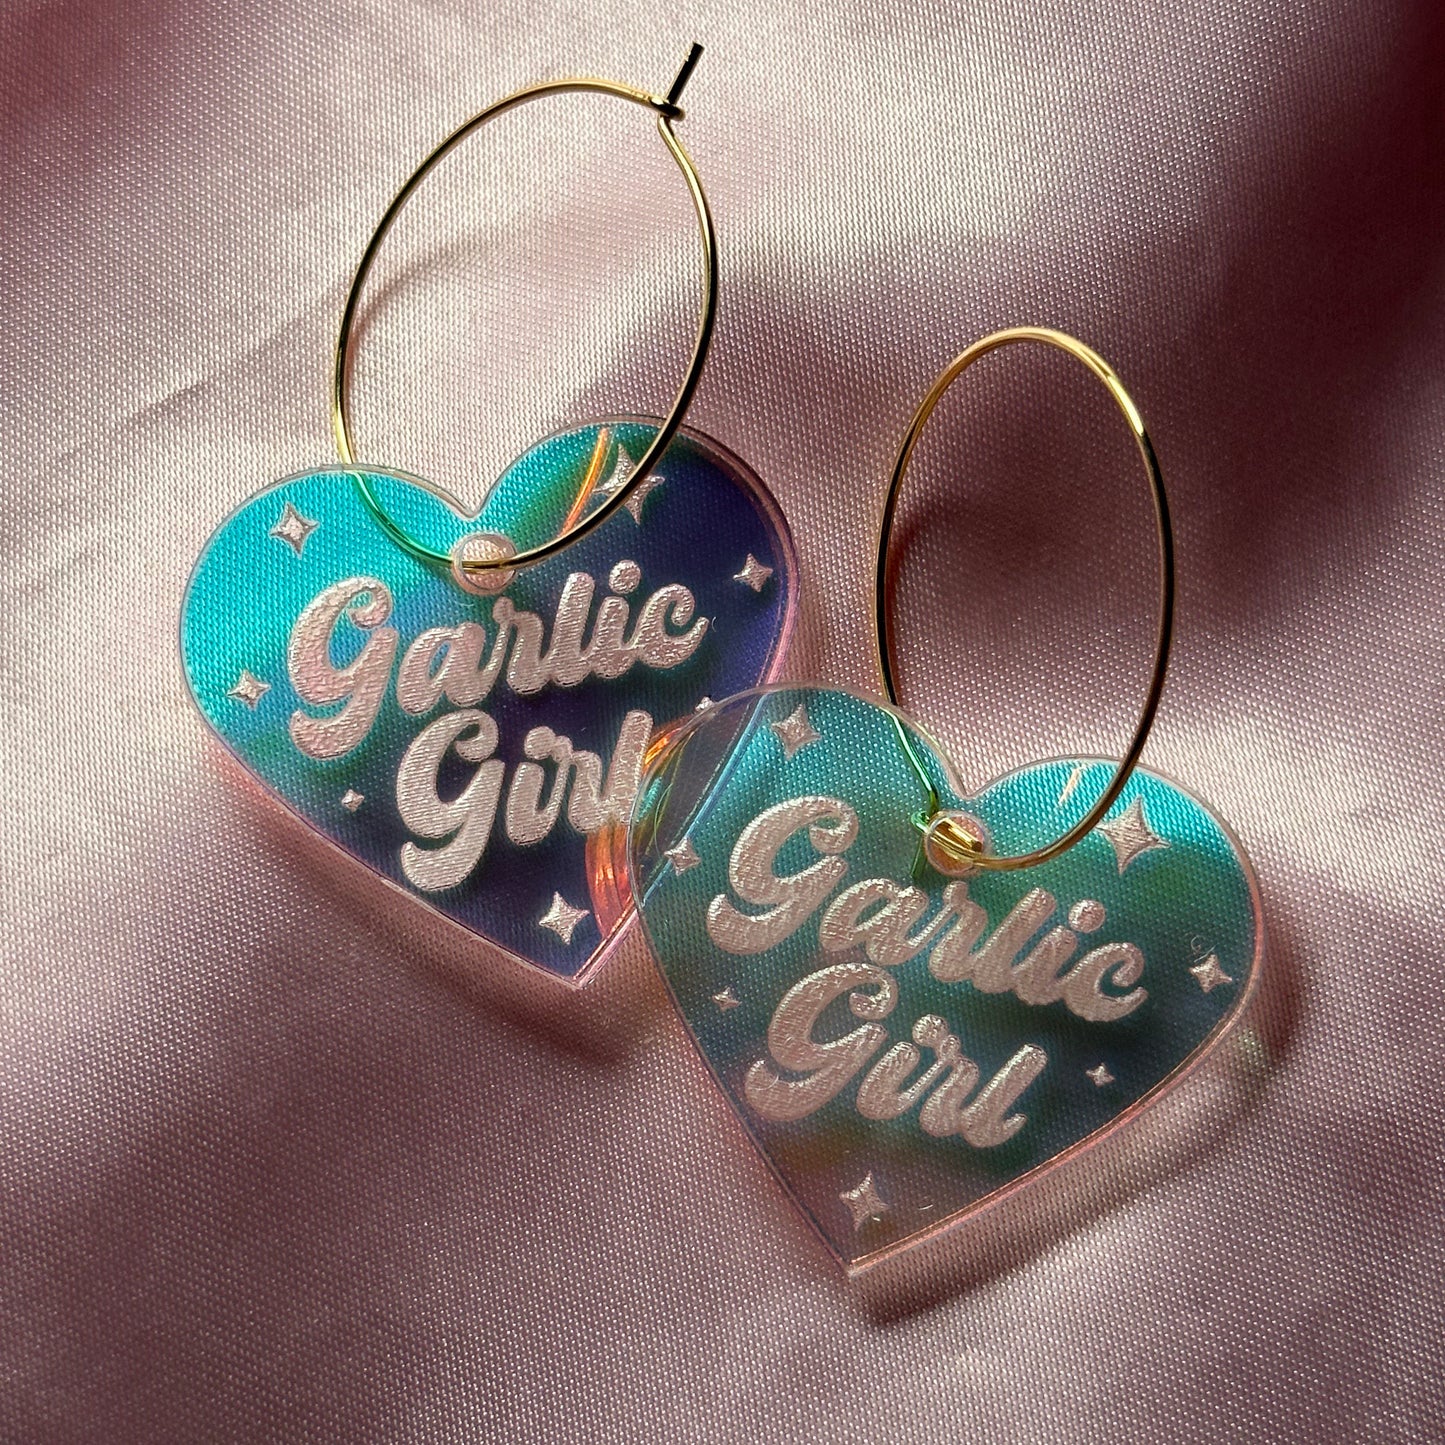 Iridescent Garlic Girl Heart Hoop Earrings